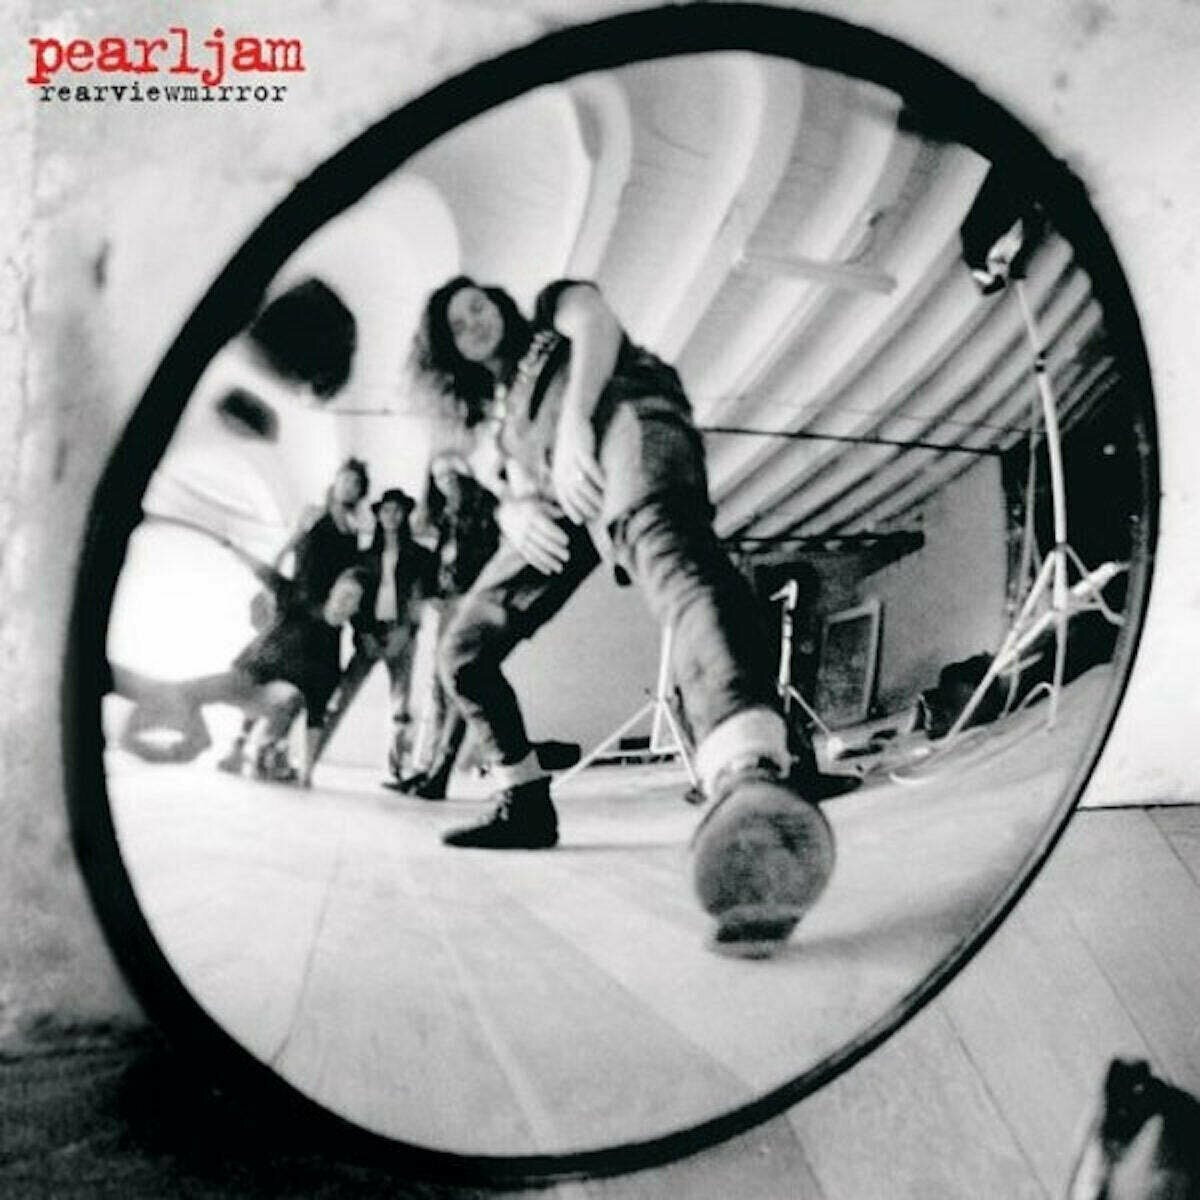 Pearl Jam - Rearviewmirror (Greatest Hits 1991-2003) (2 LP) Pearl Jam